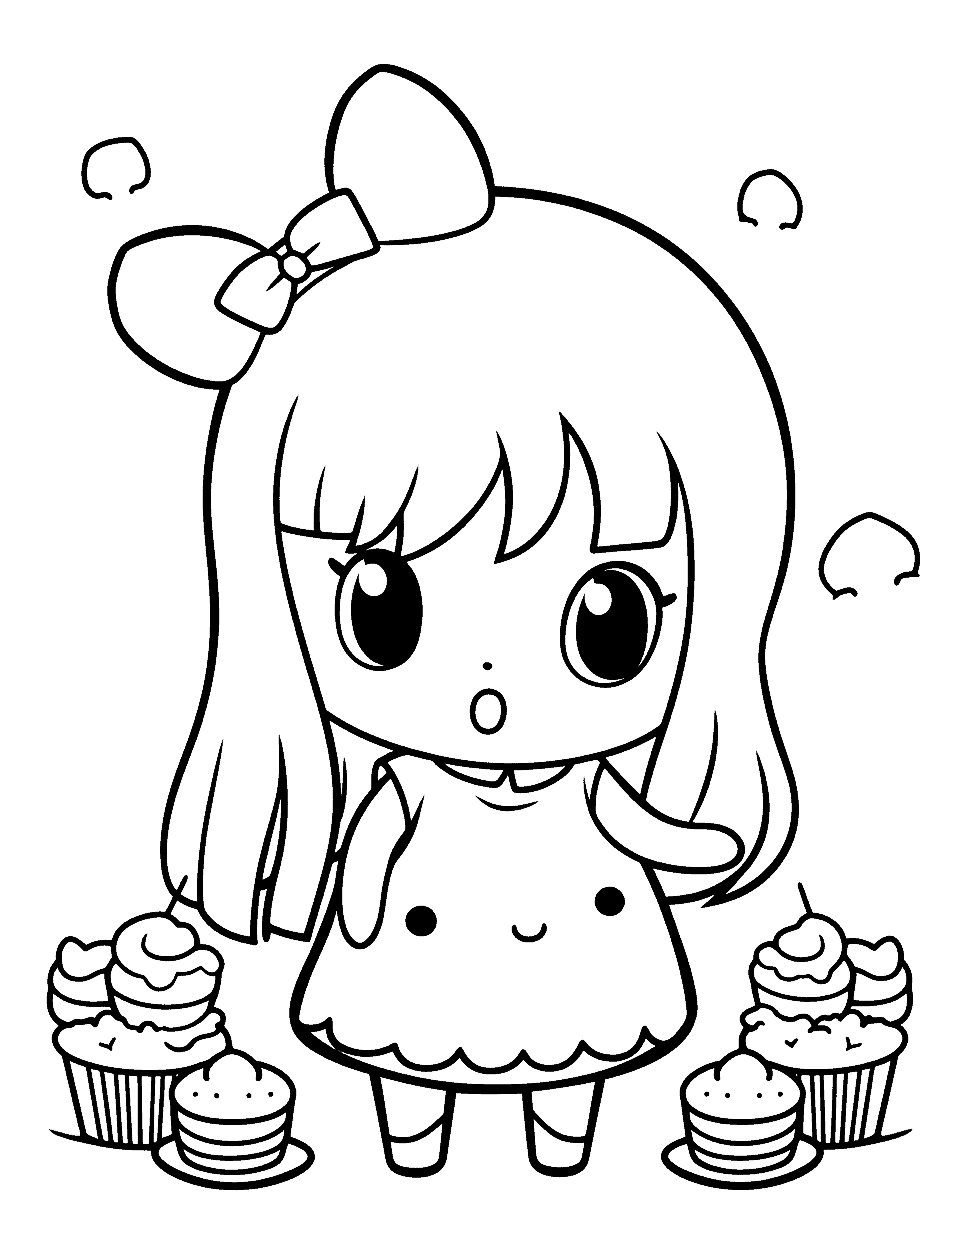 Cupcake Party with Anime Girl Kawaii Coloring Page - An Anime girl hosting a grand cupcake party for her Kawaii friends.